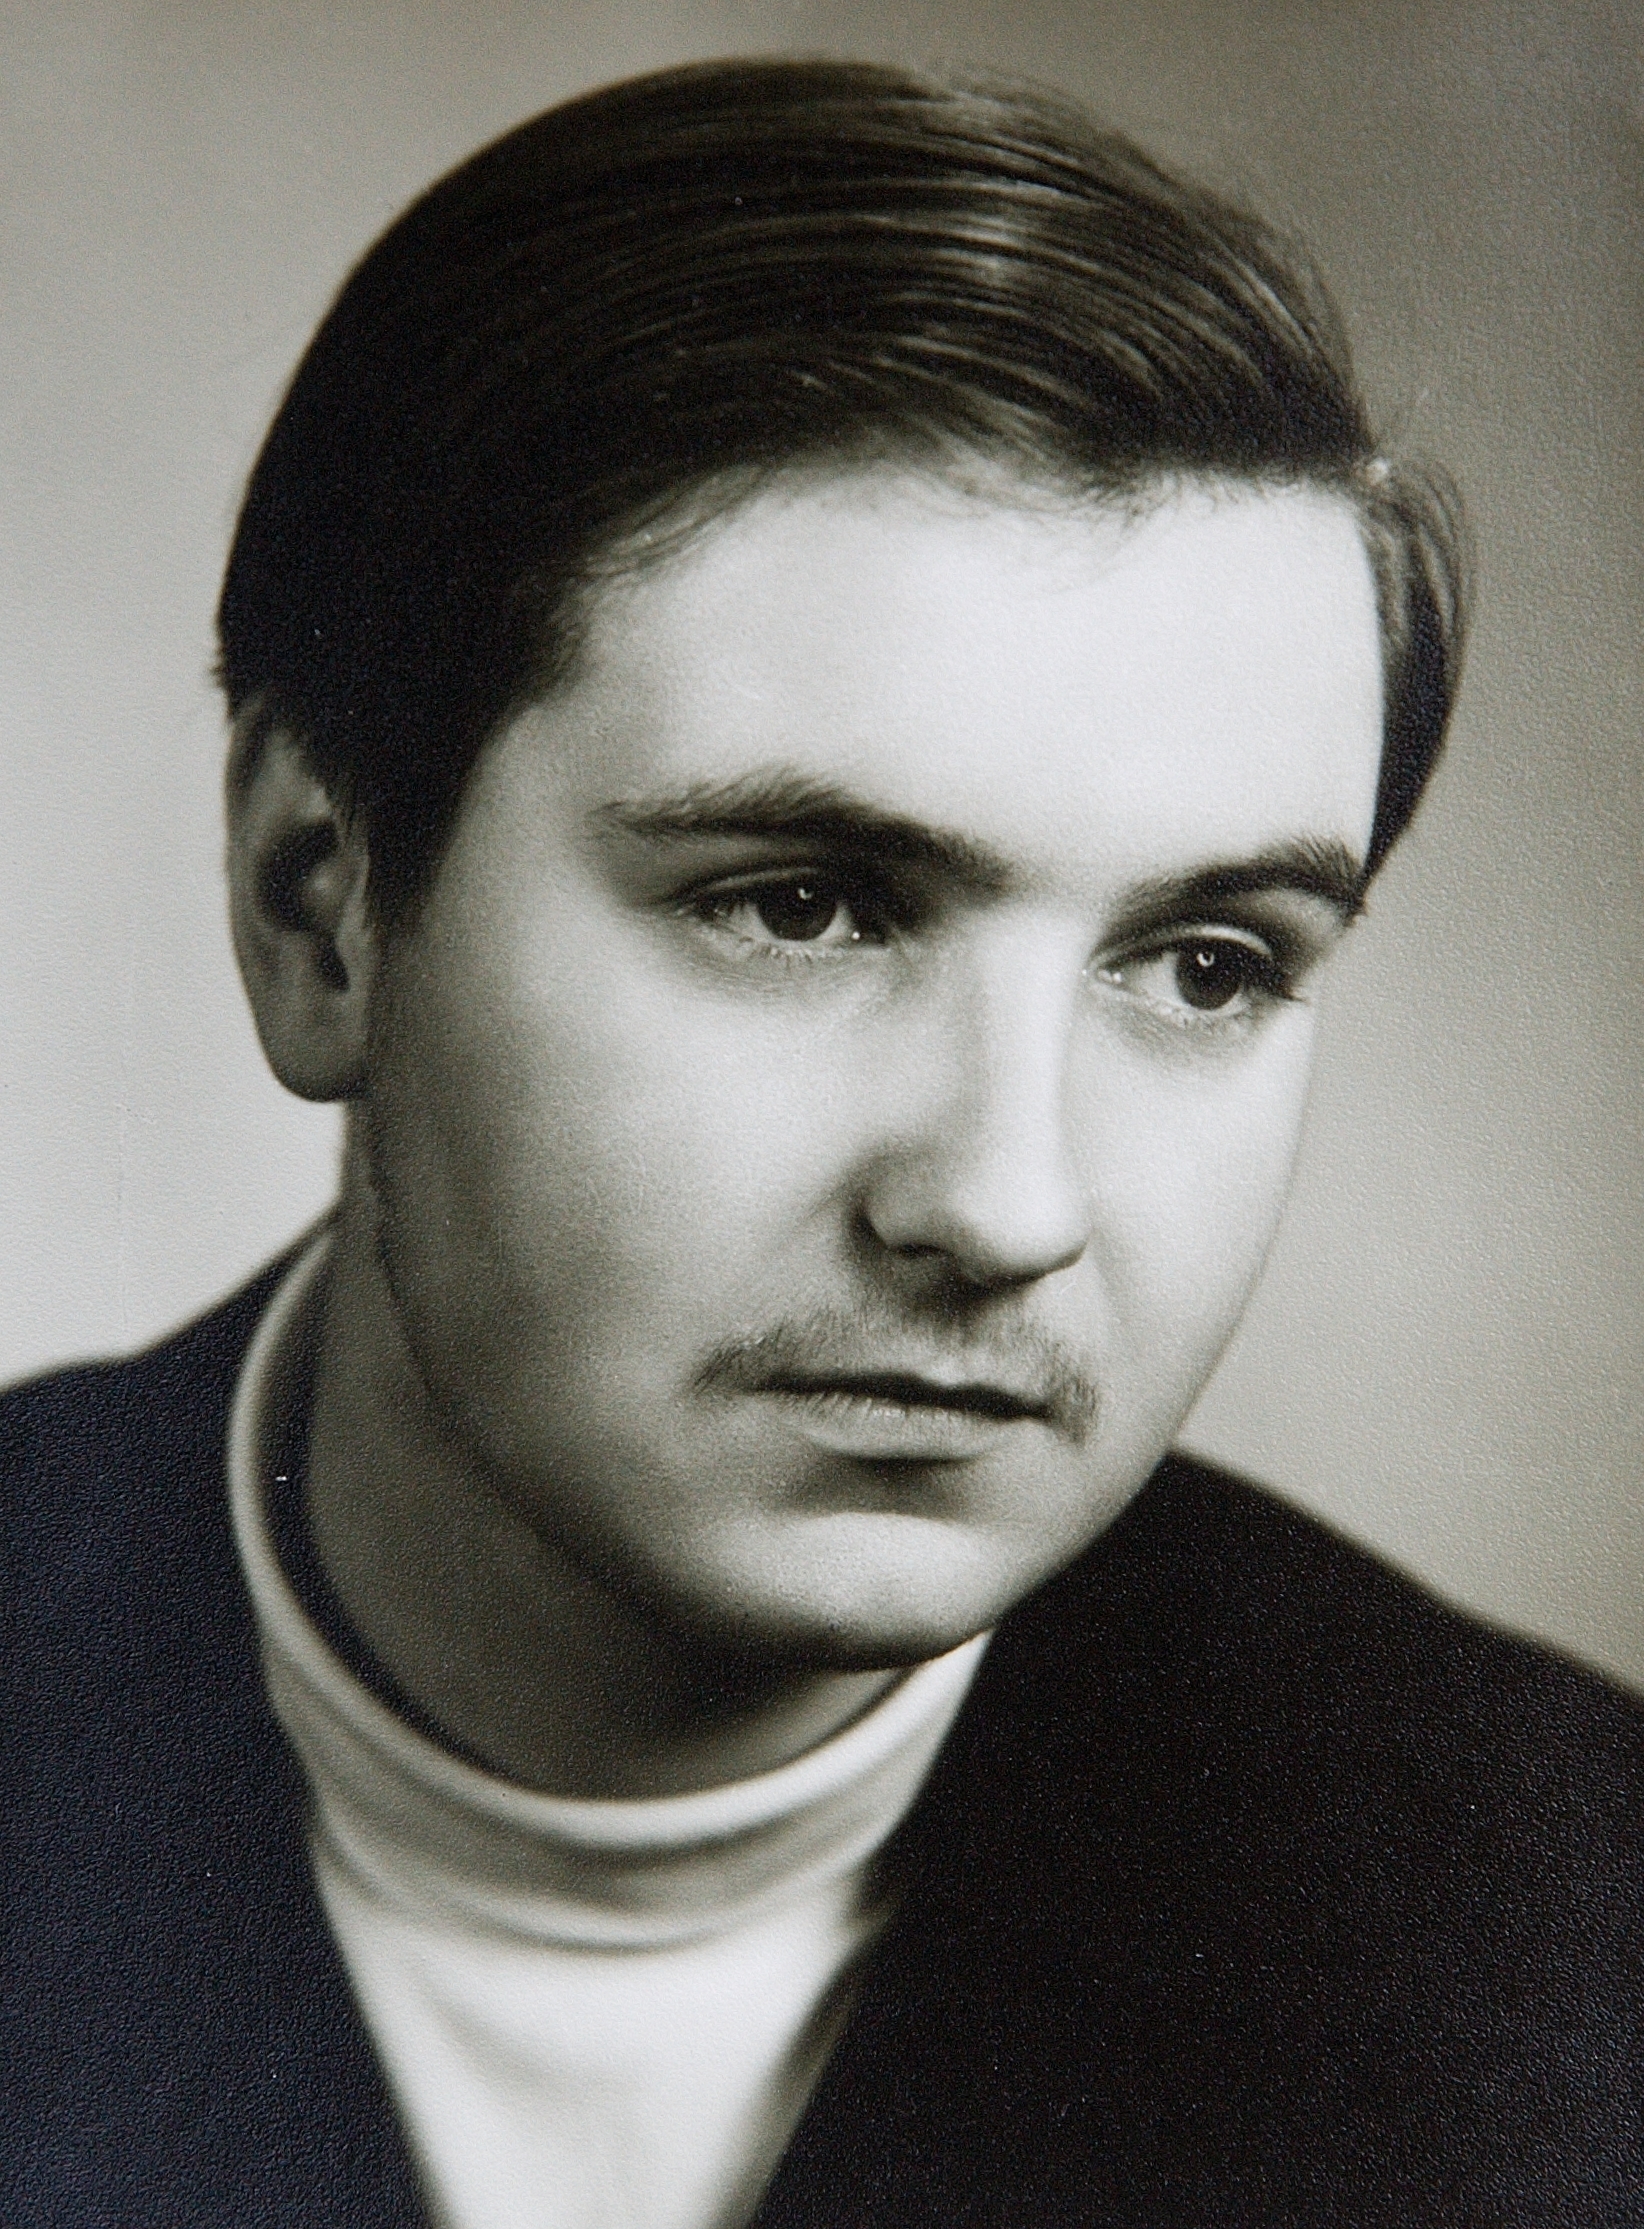 Milan Brunclík as a student, 1970